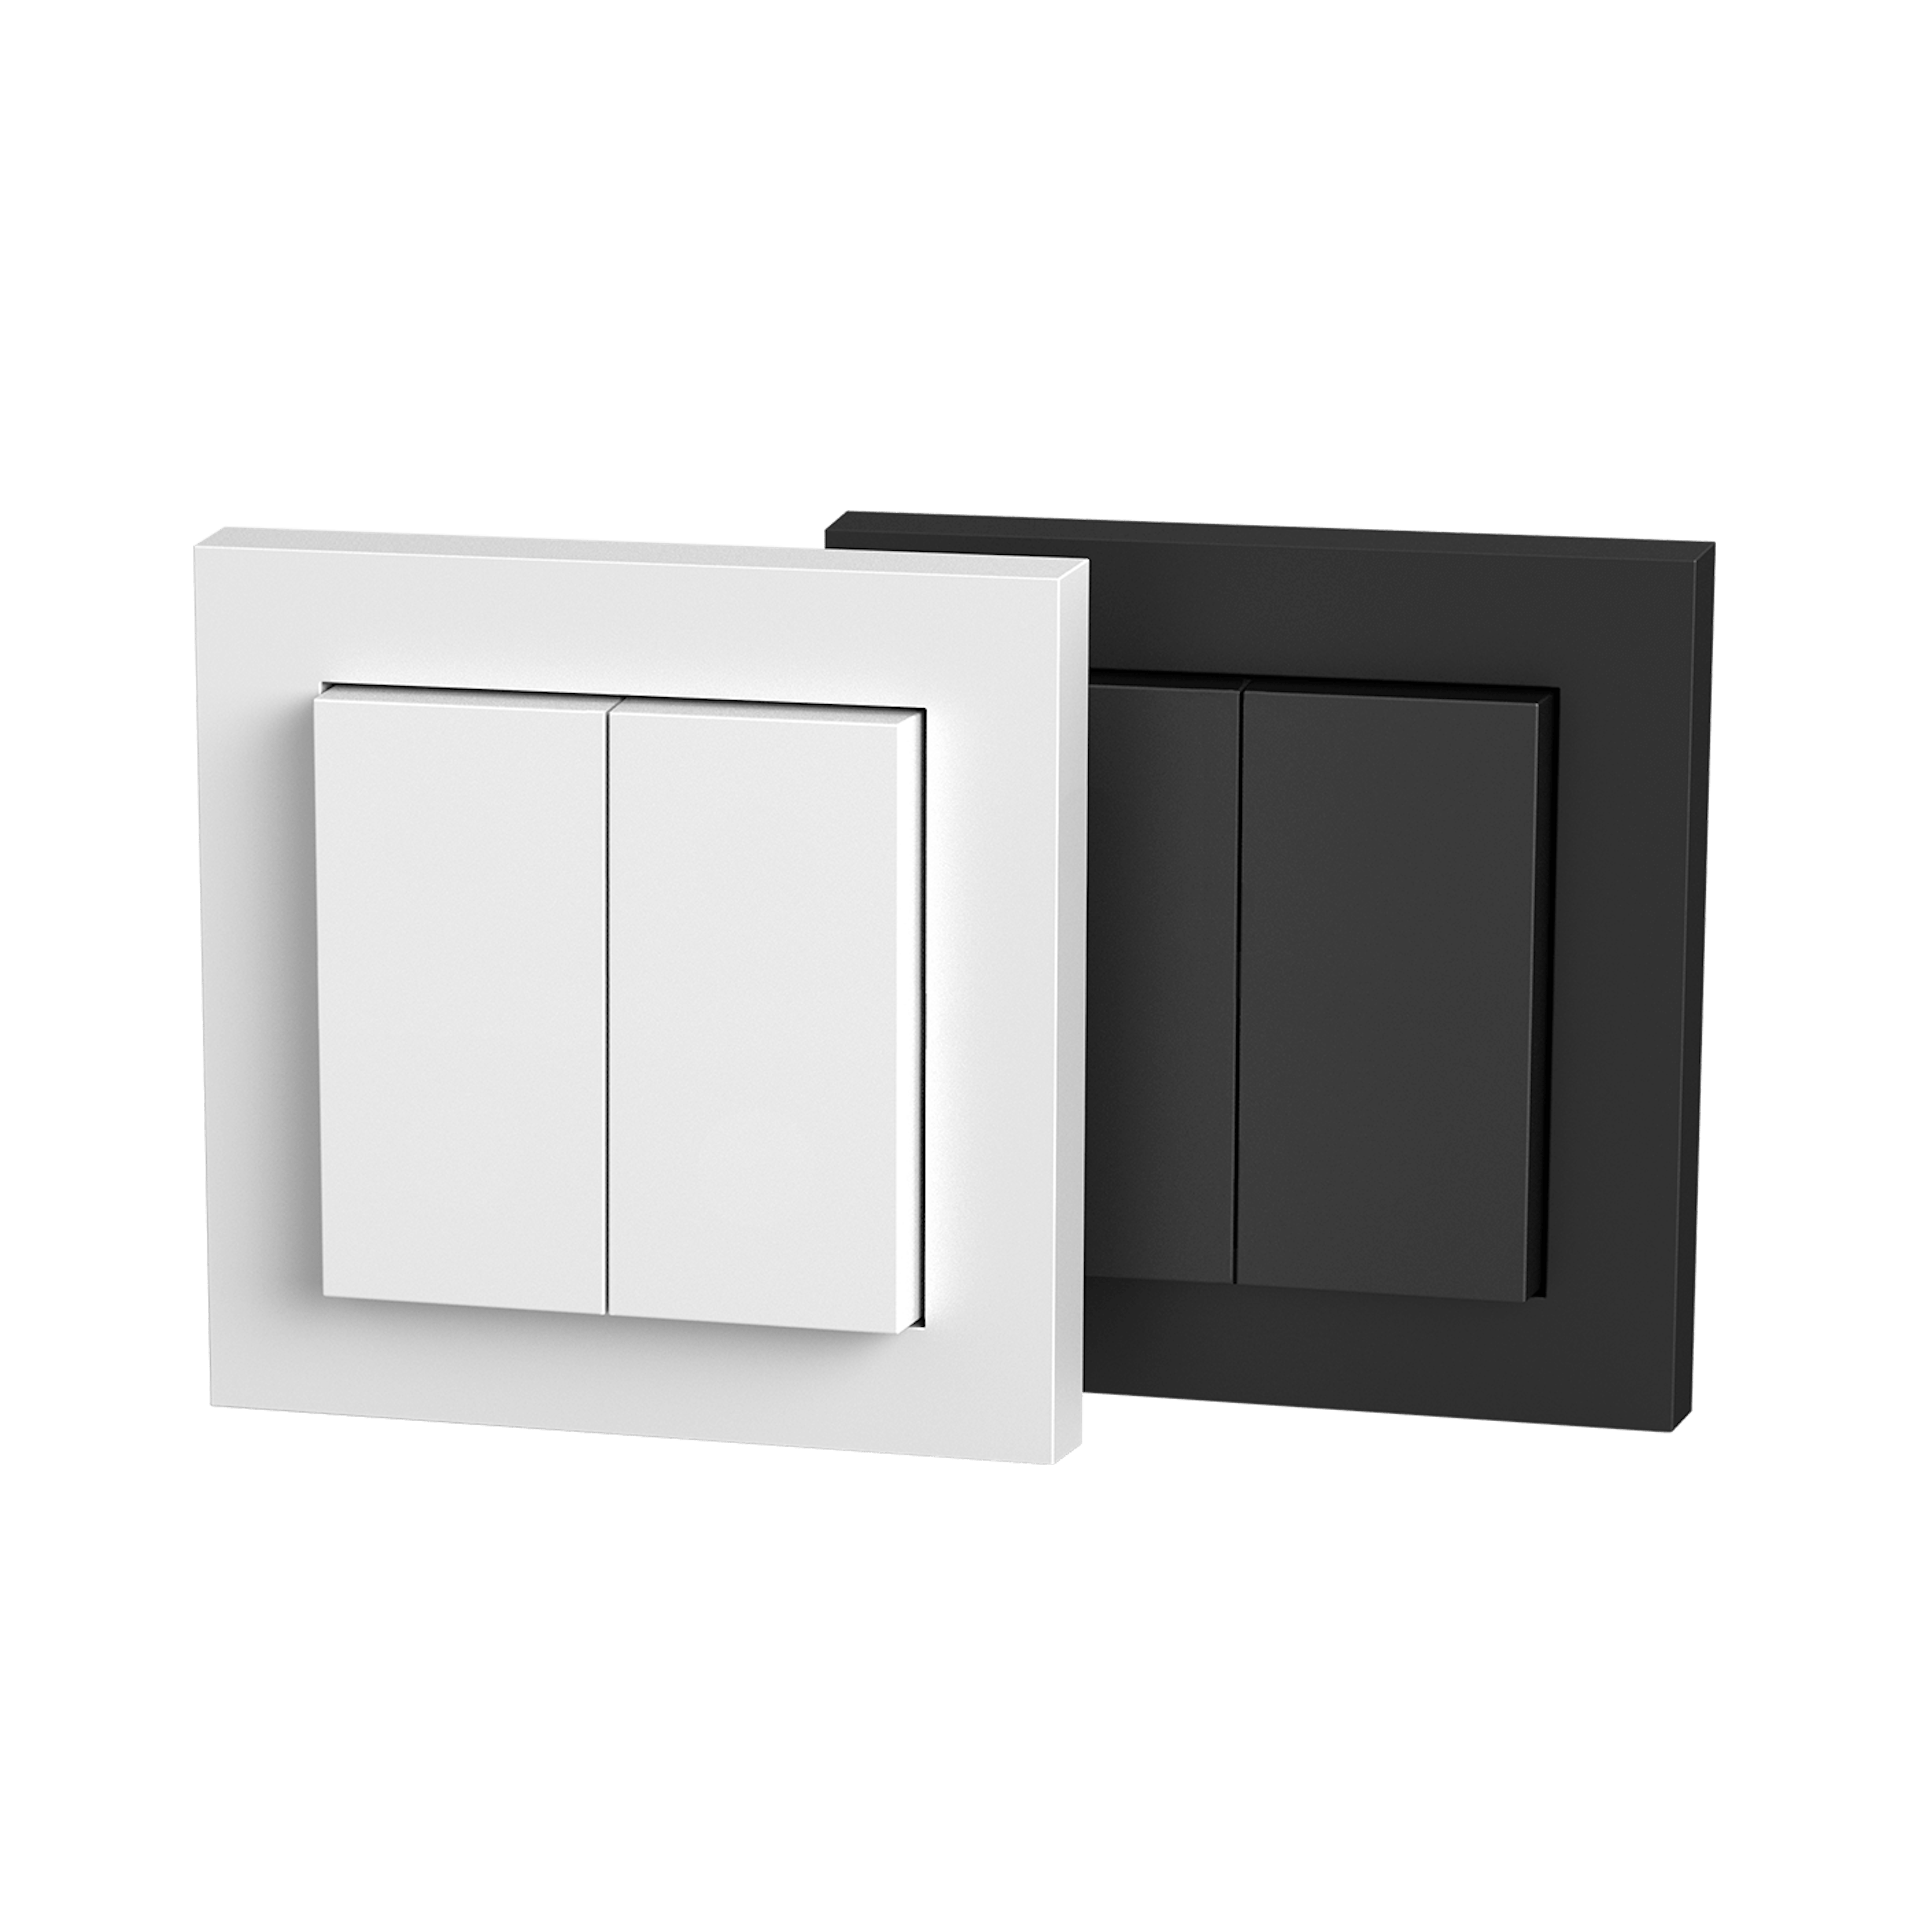 Senic Smart Switch - Details Image